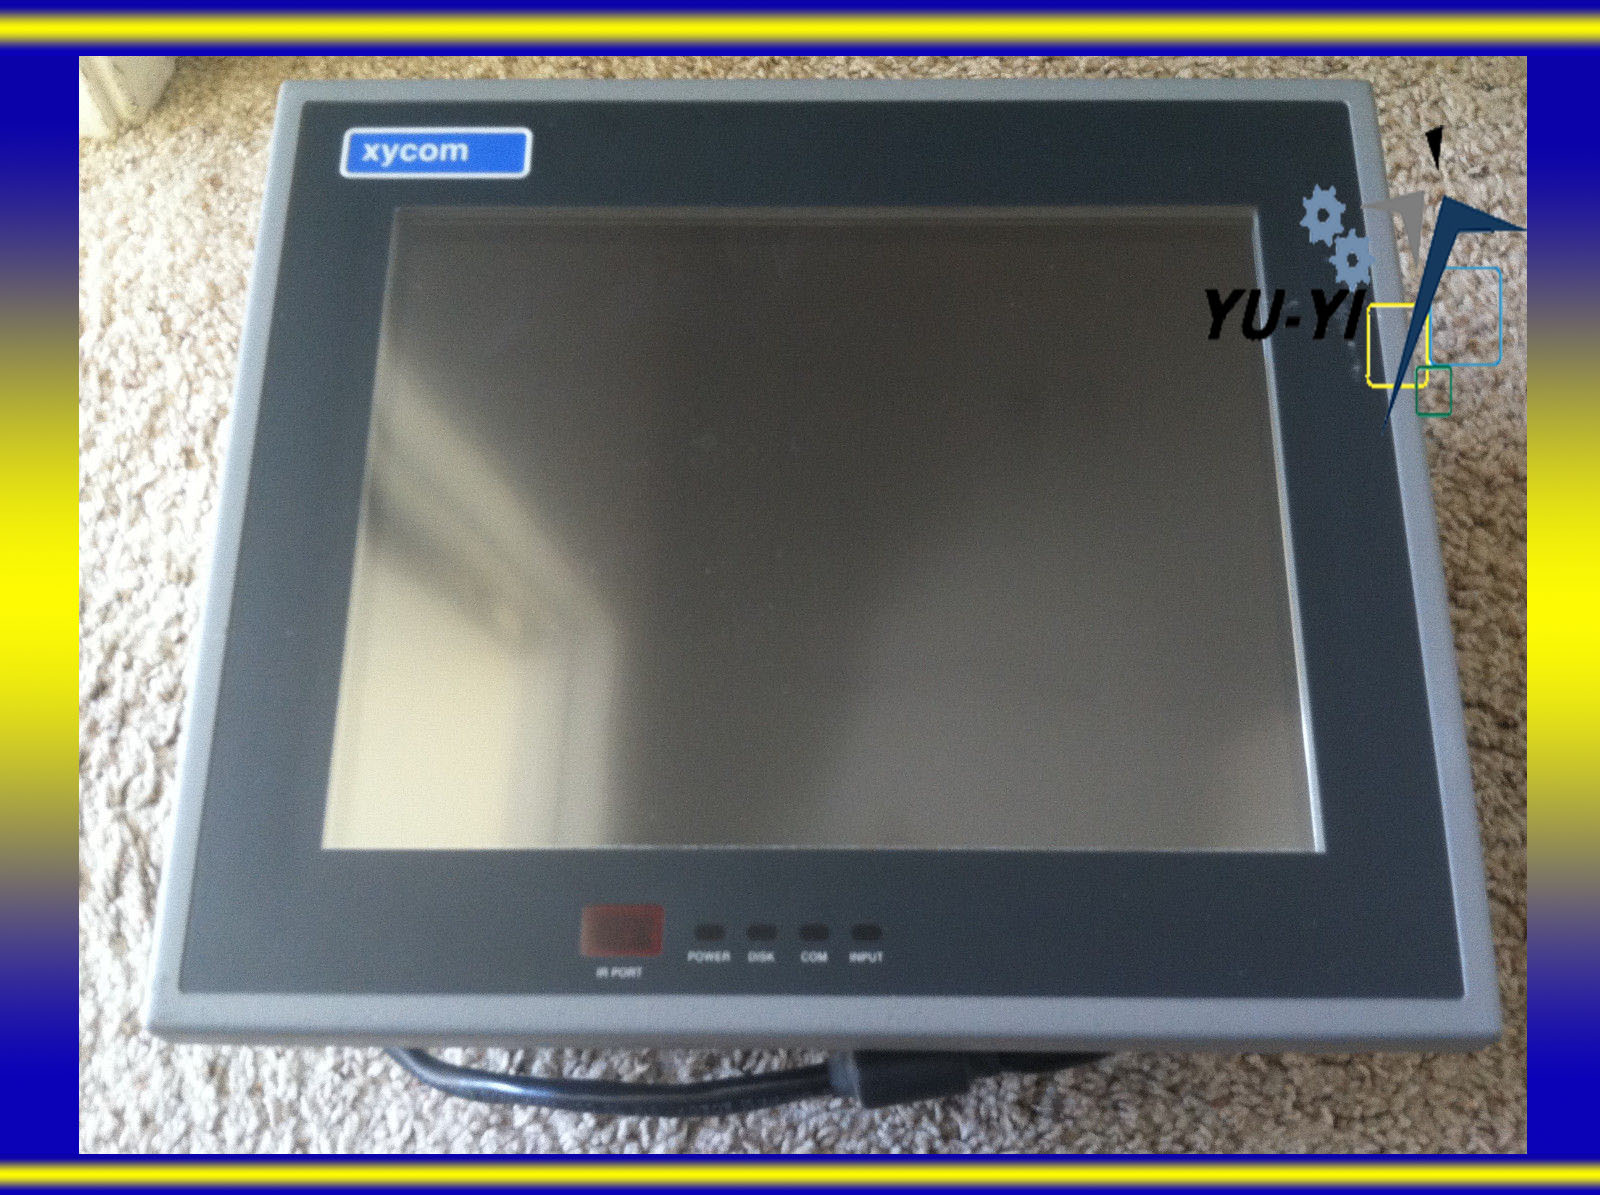 Xycom Model 9462 12.1 Touchscreen Monitor Operation Interface Workstation